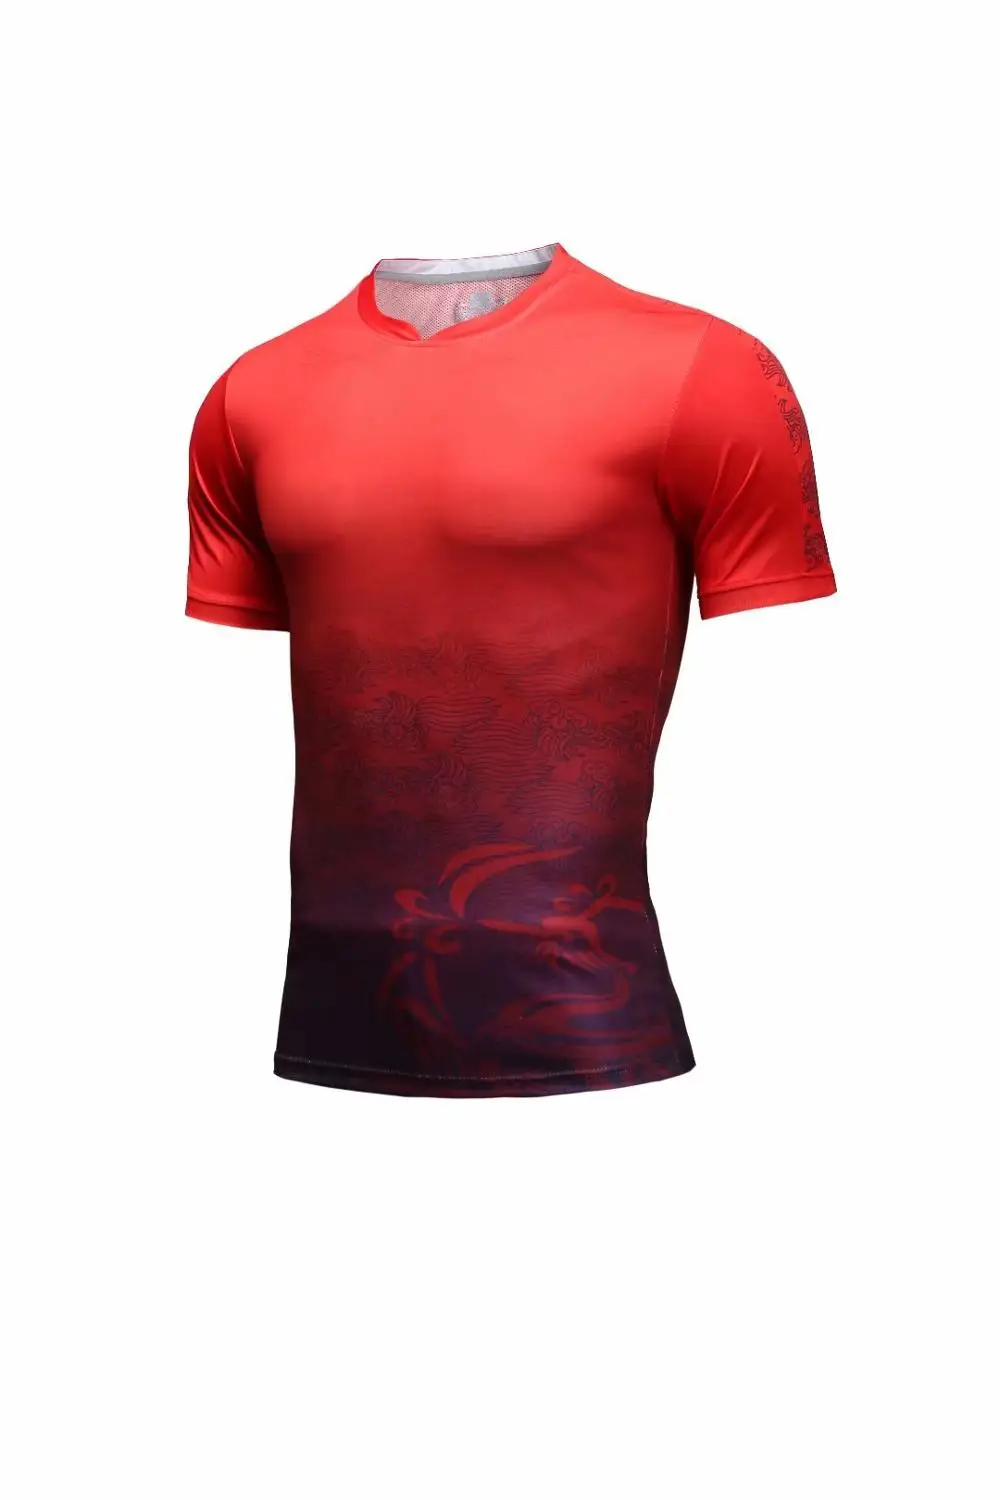 /19 Sqv2d DIY флаг Футбол Джерси air team training комплект рубашка с короткими рукавами Спортивная рубашка Джерси рубашка - Цвет: Красный